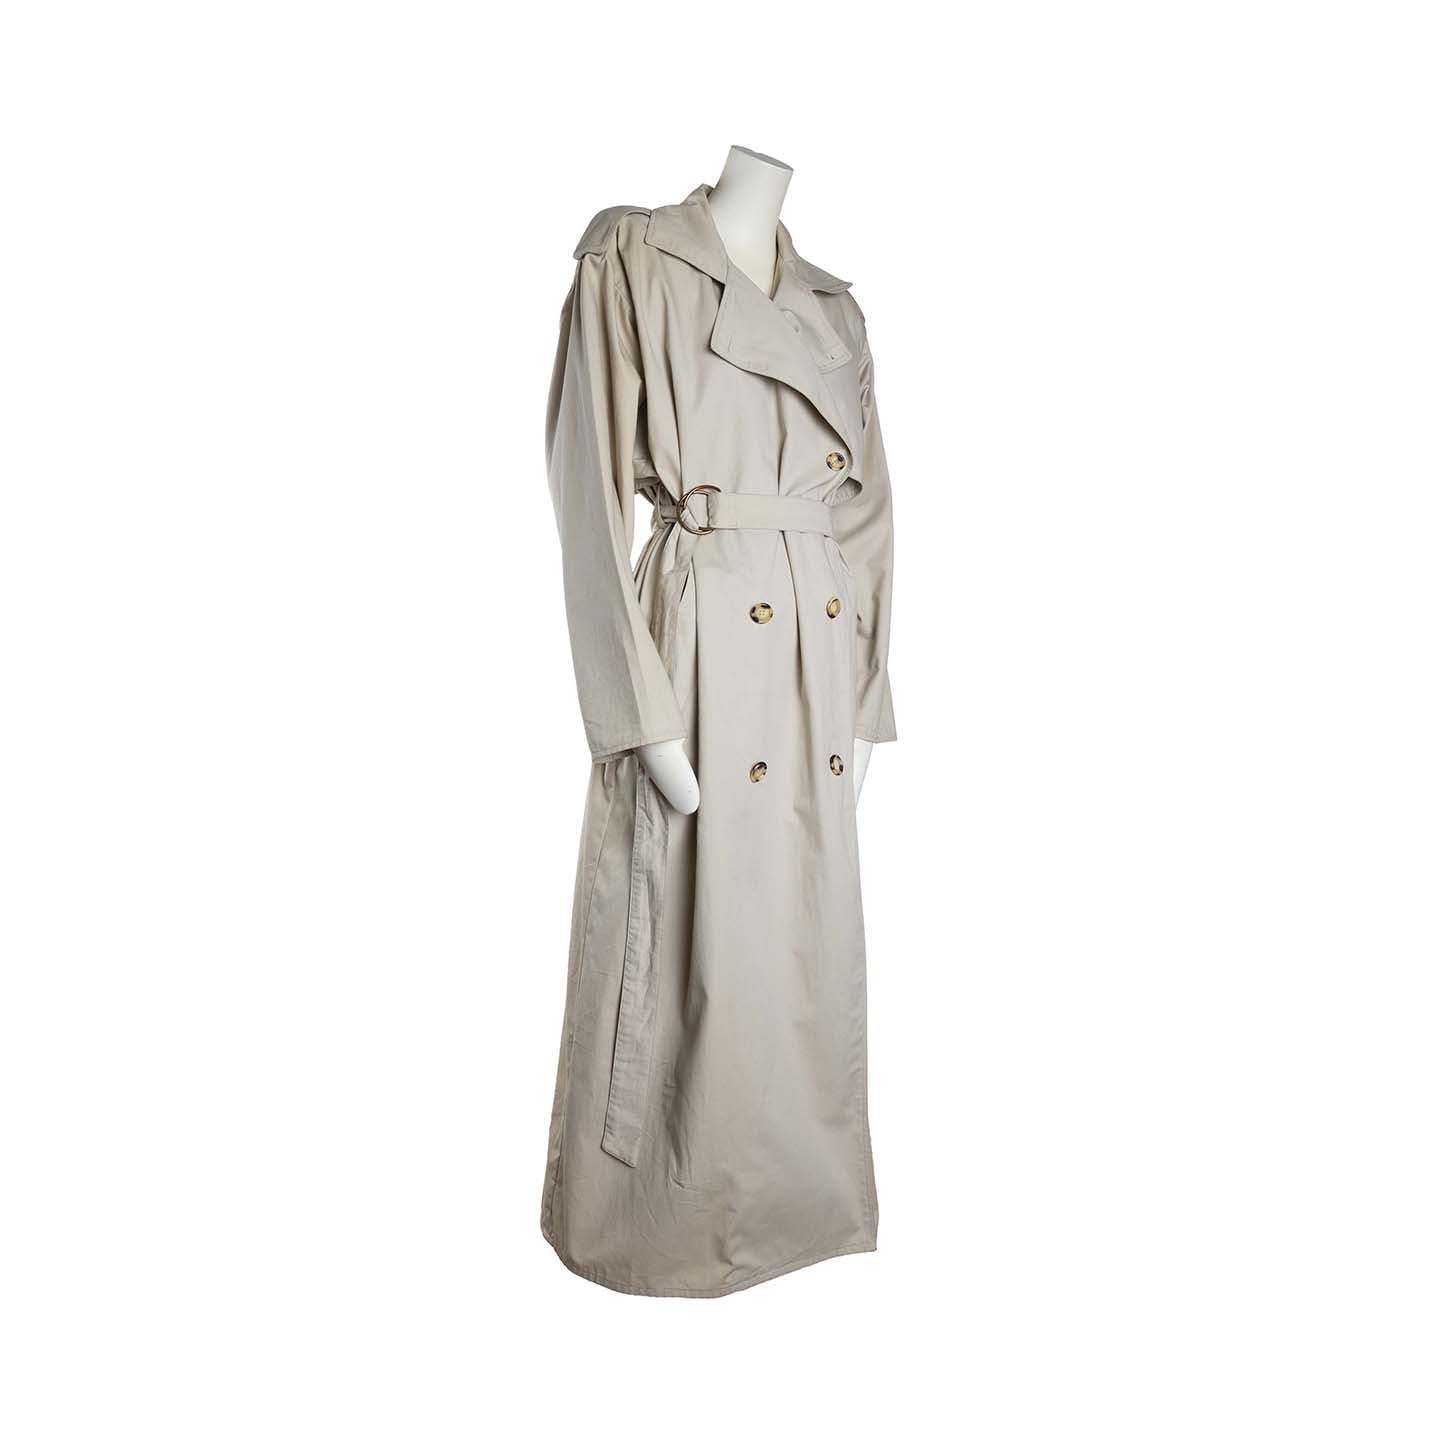 Lysis vintage Christian Lacroix vintage trench coat - One size - 1980s